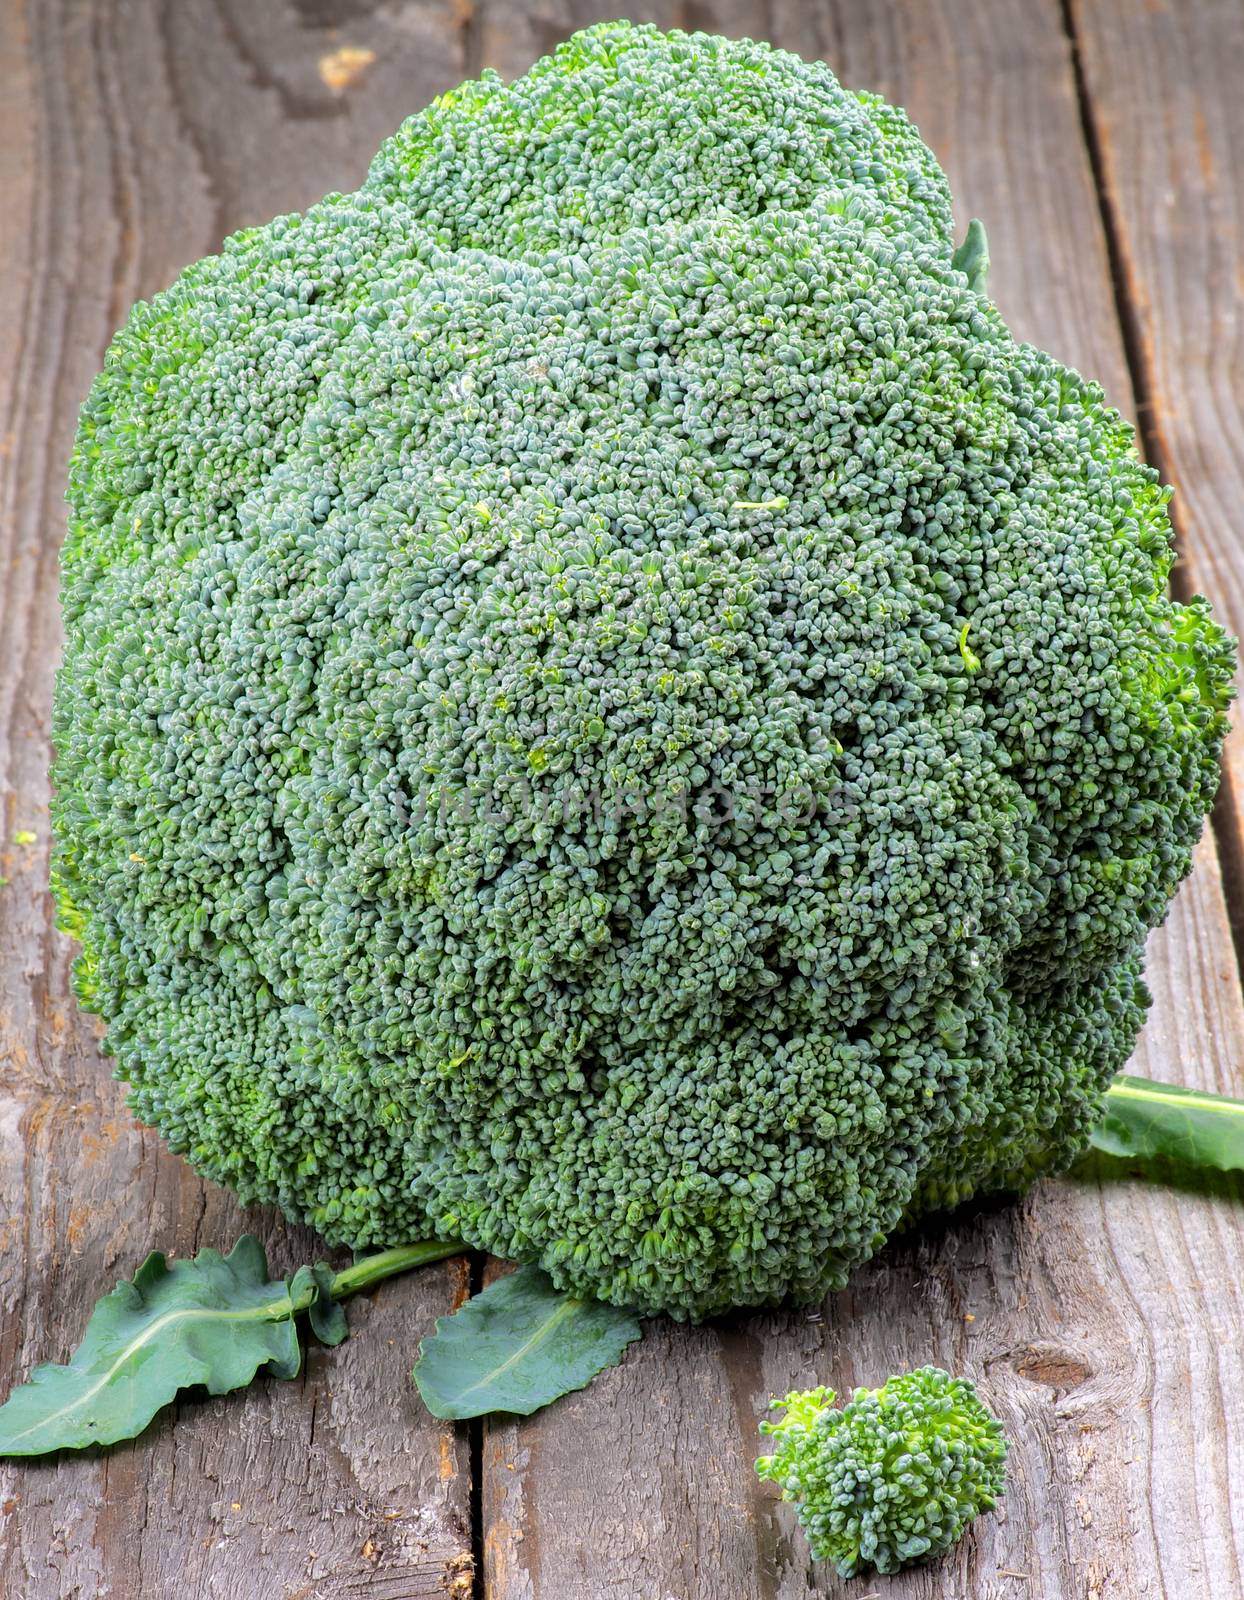 Fresh Raw Crunchy Broccoli closeup on Rustic Wooden background